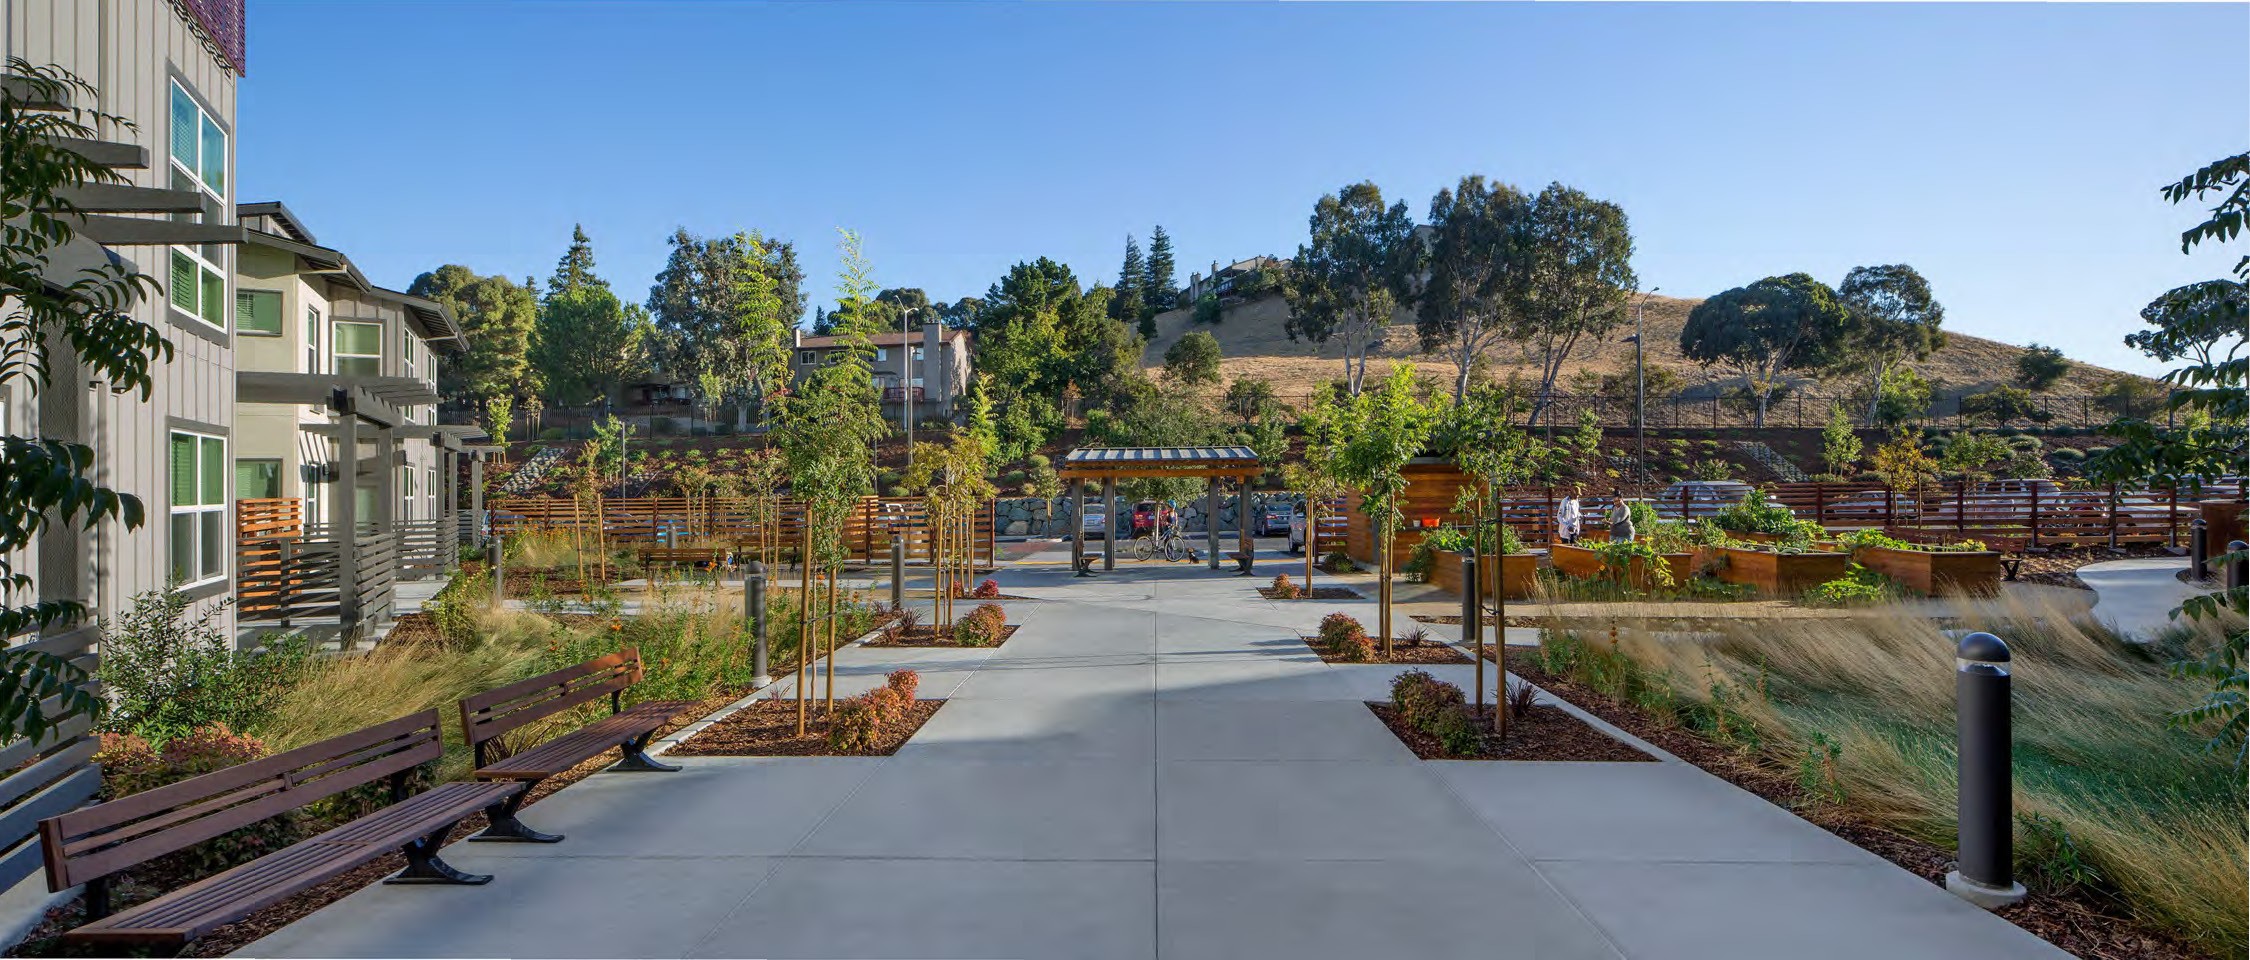 Jett Landscape Architecture Design, Seattle Landscape Architecture Firms